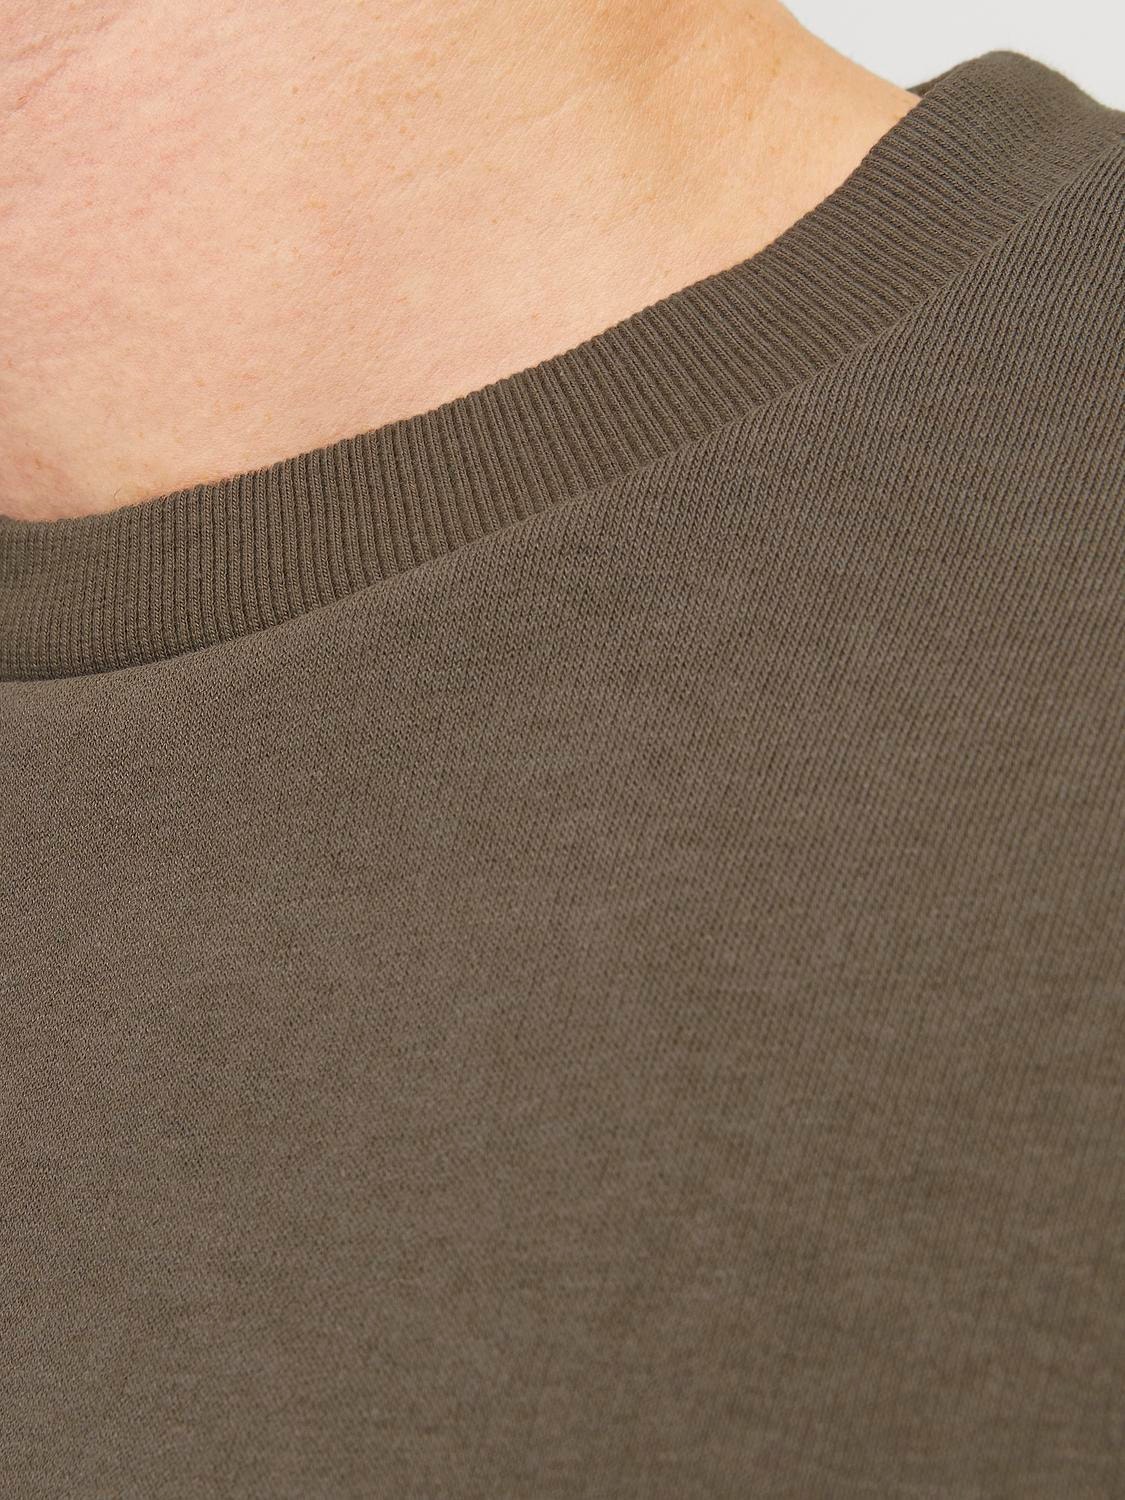 Jack & Jones Plain Crewn Neck Sweatshirt -Bungee Cord - 12249341